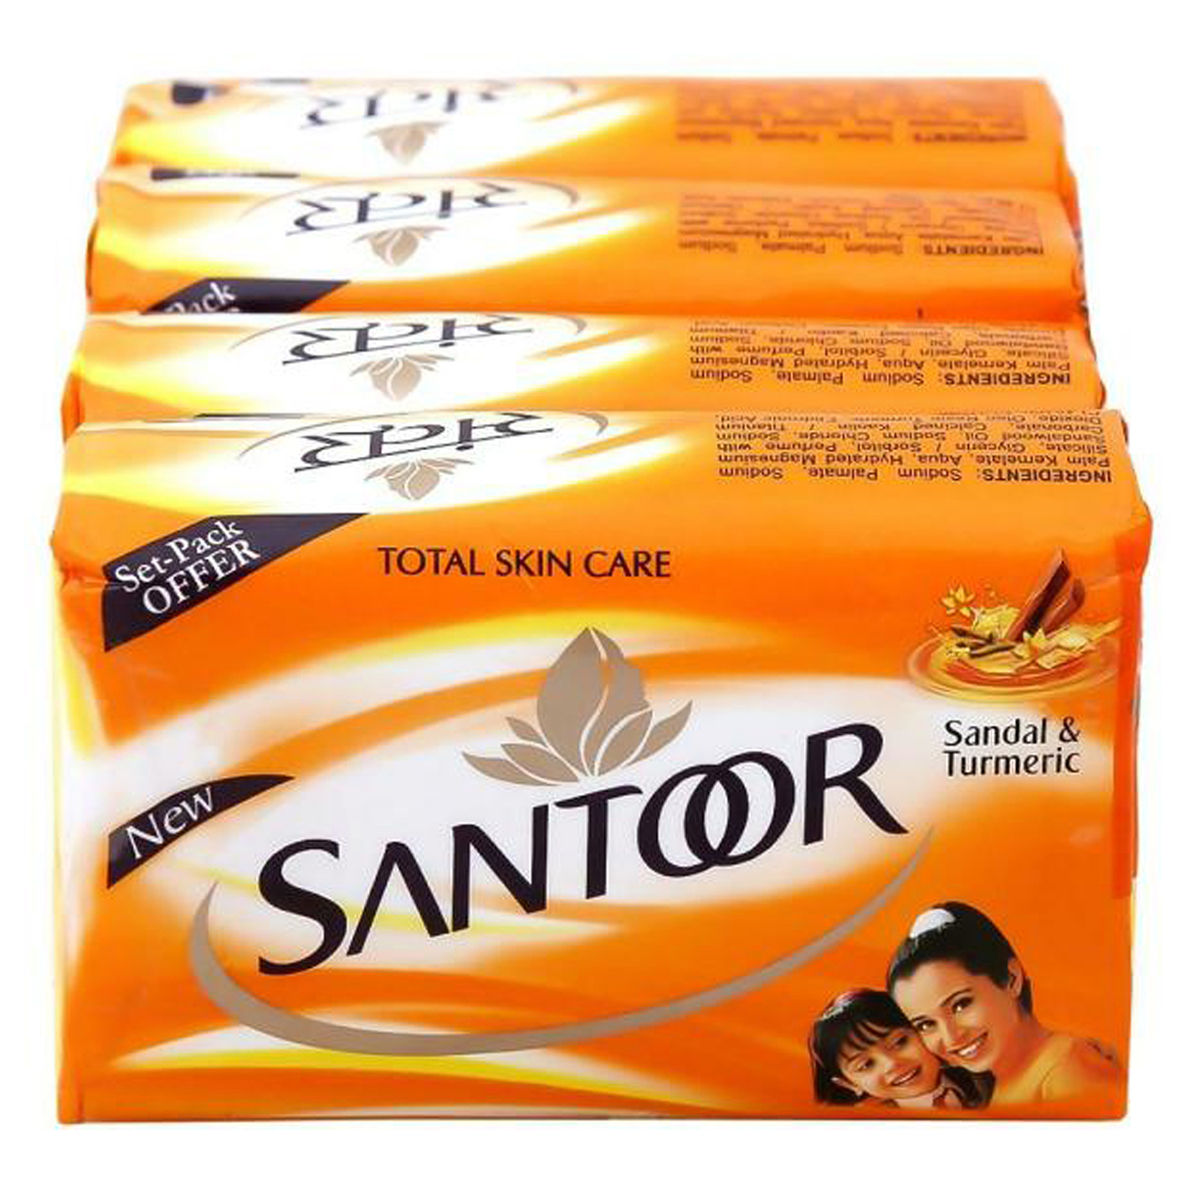 Buy Santoor Sandal & Turmeric Soap, 500 gm (4 x 125 gm) Online